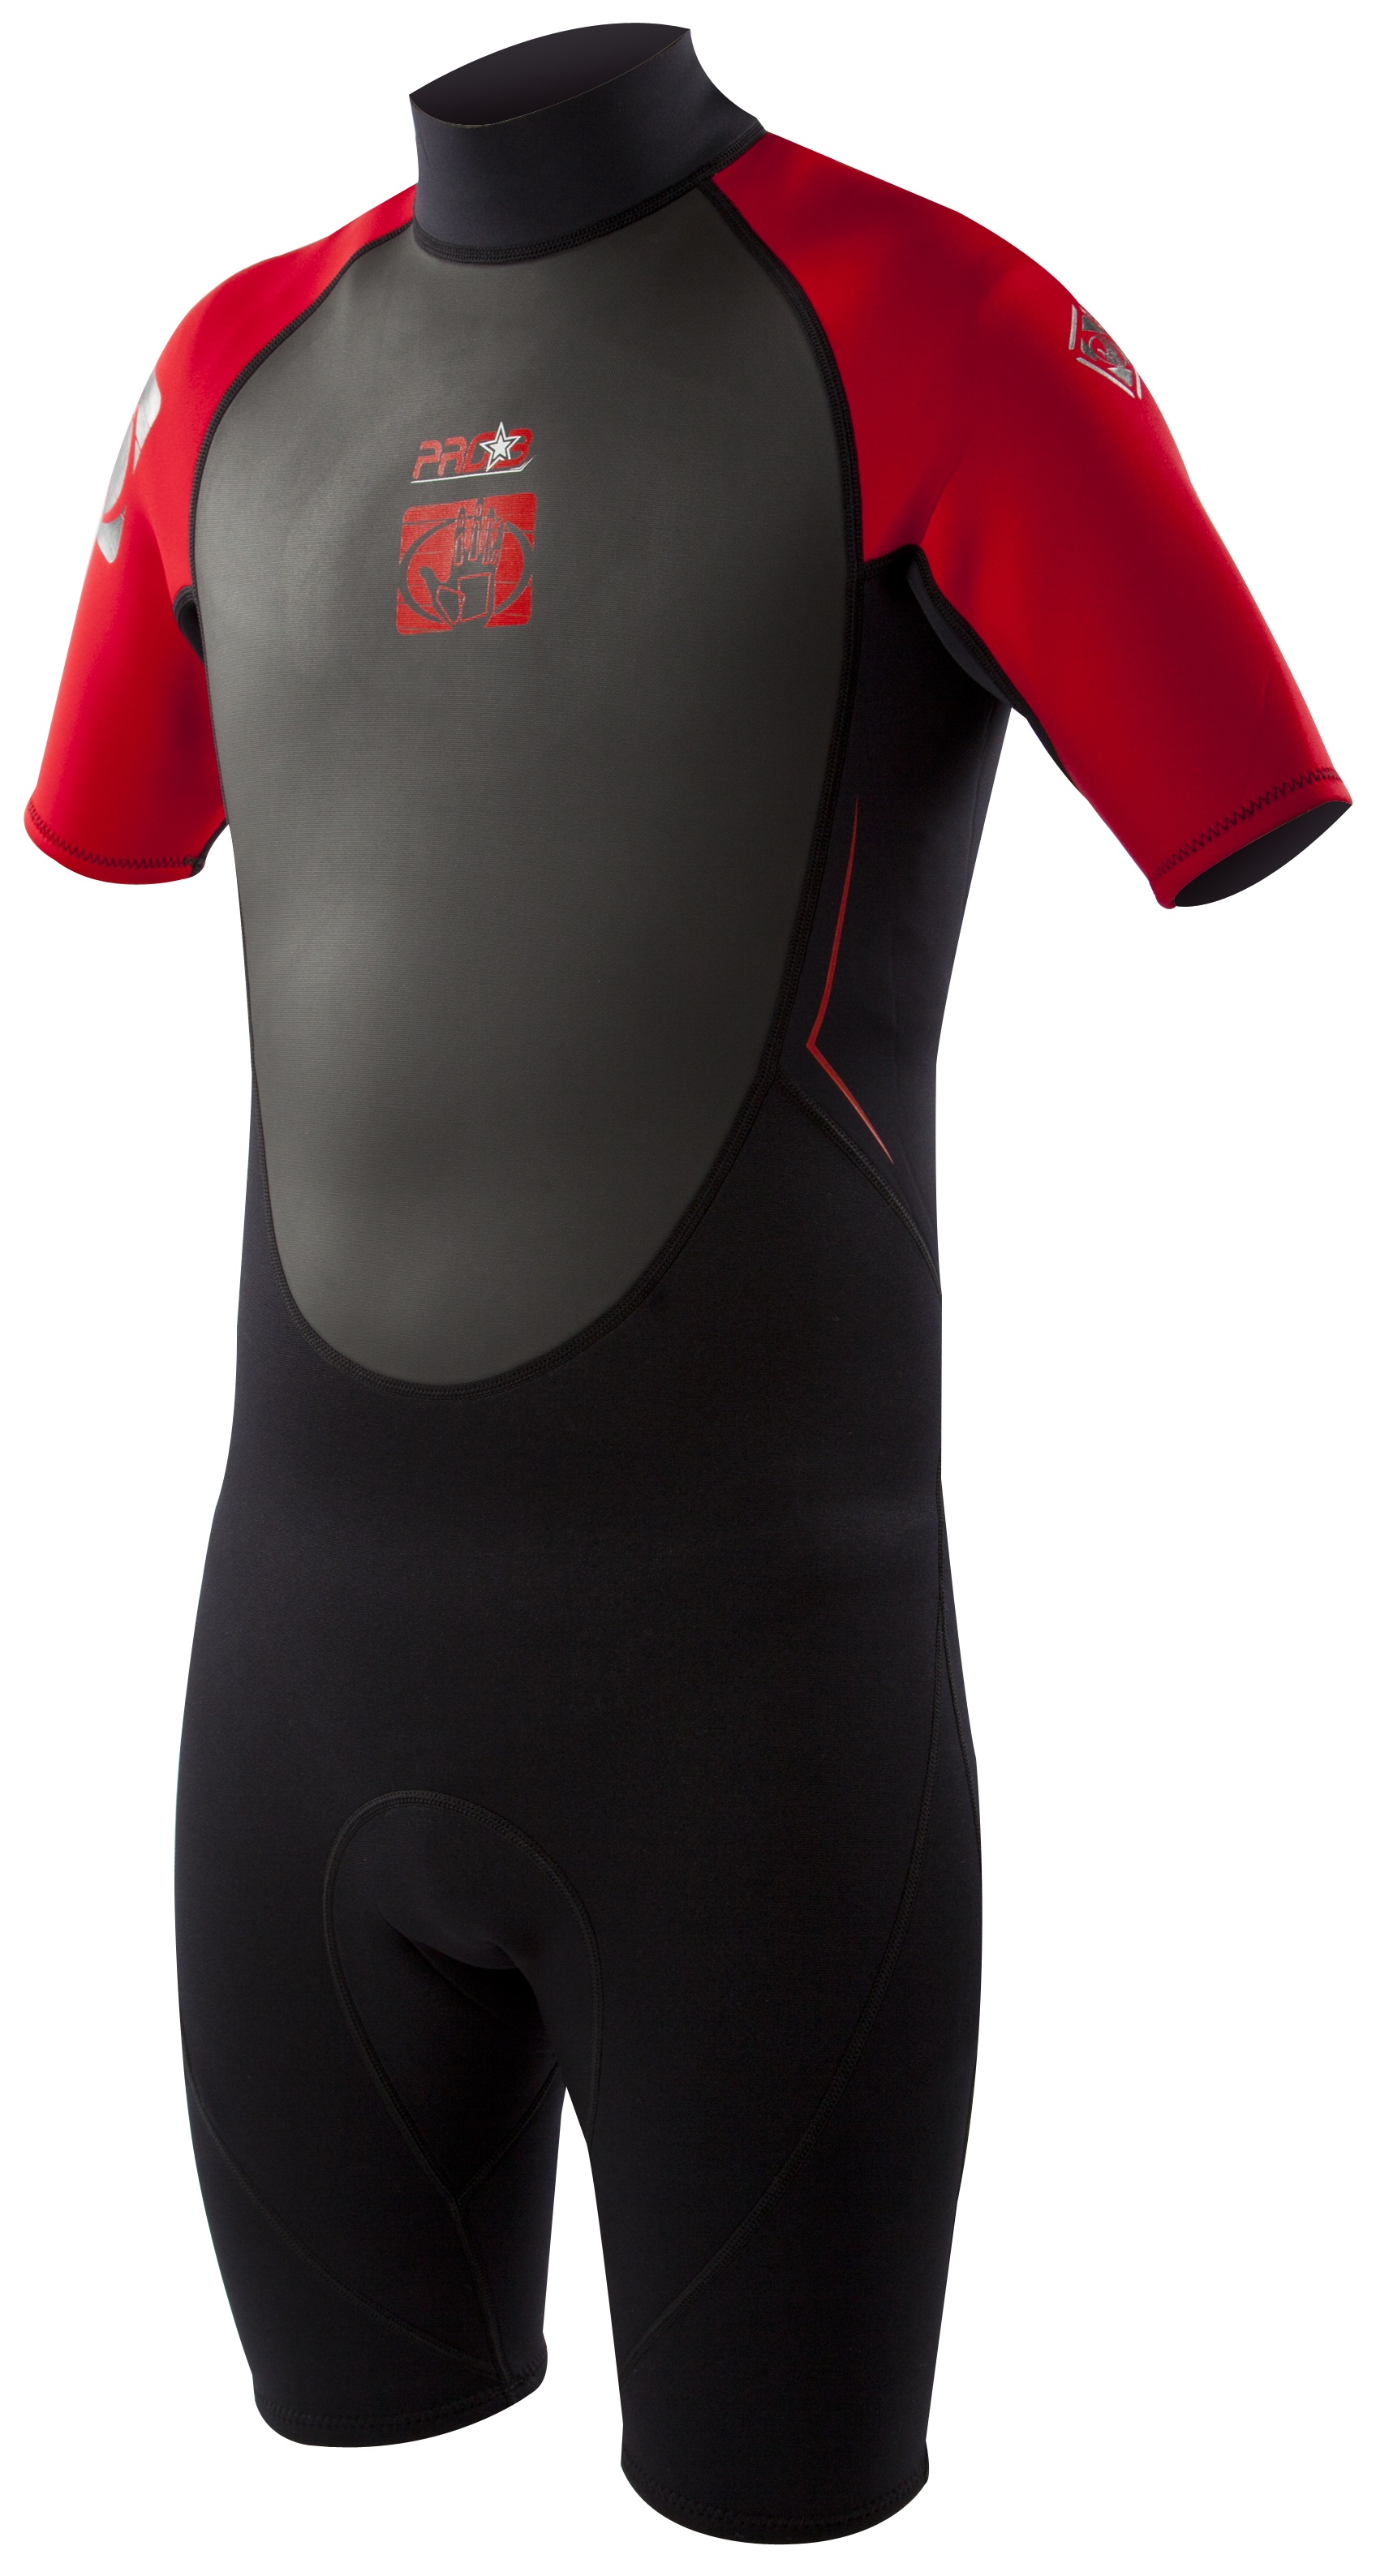 Body Glove Men's Pro3 Springsuit Wetsuit 2/1mm Black/Red